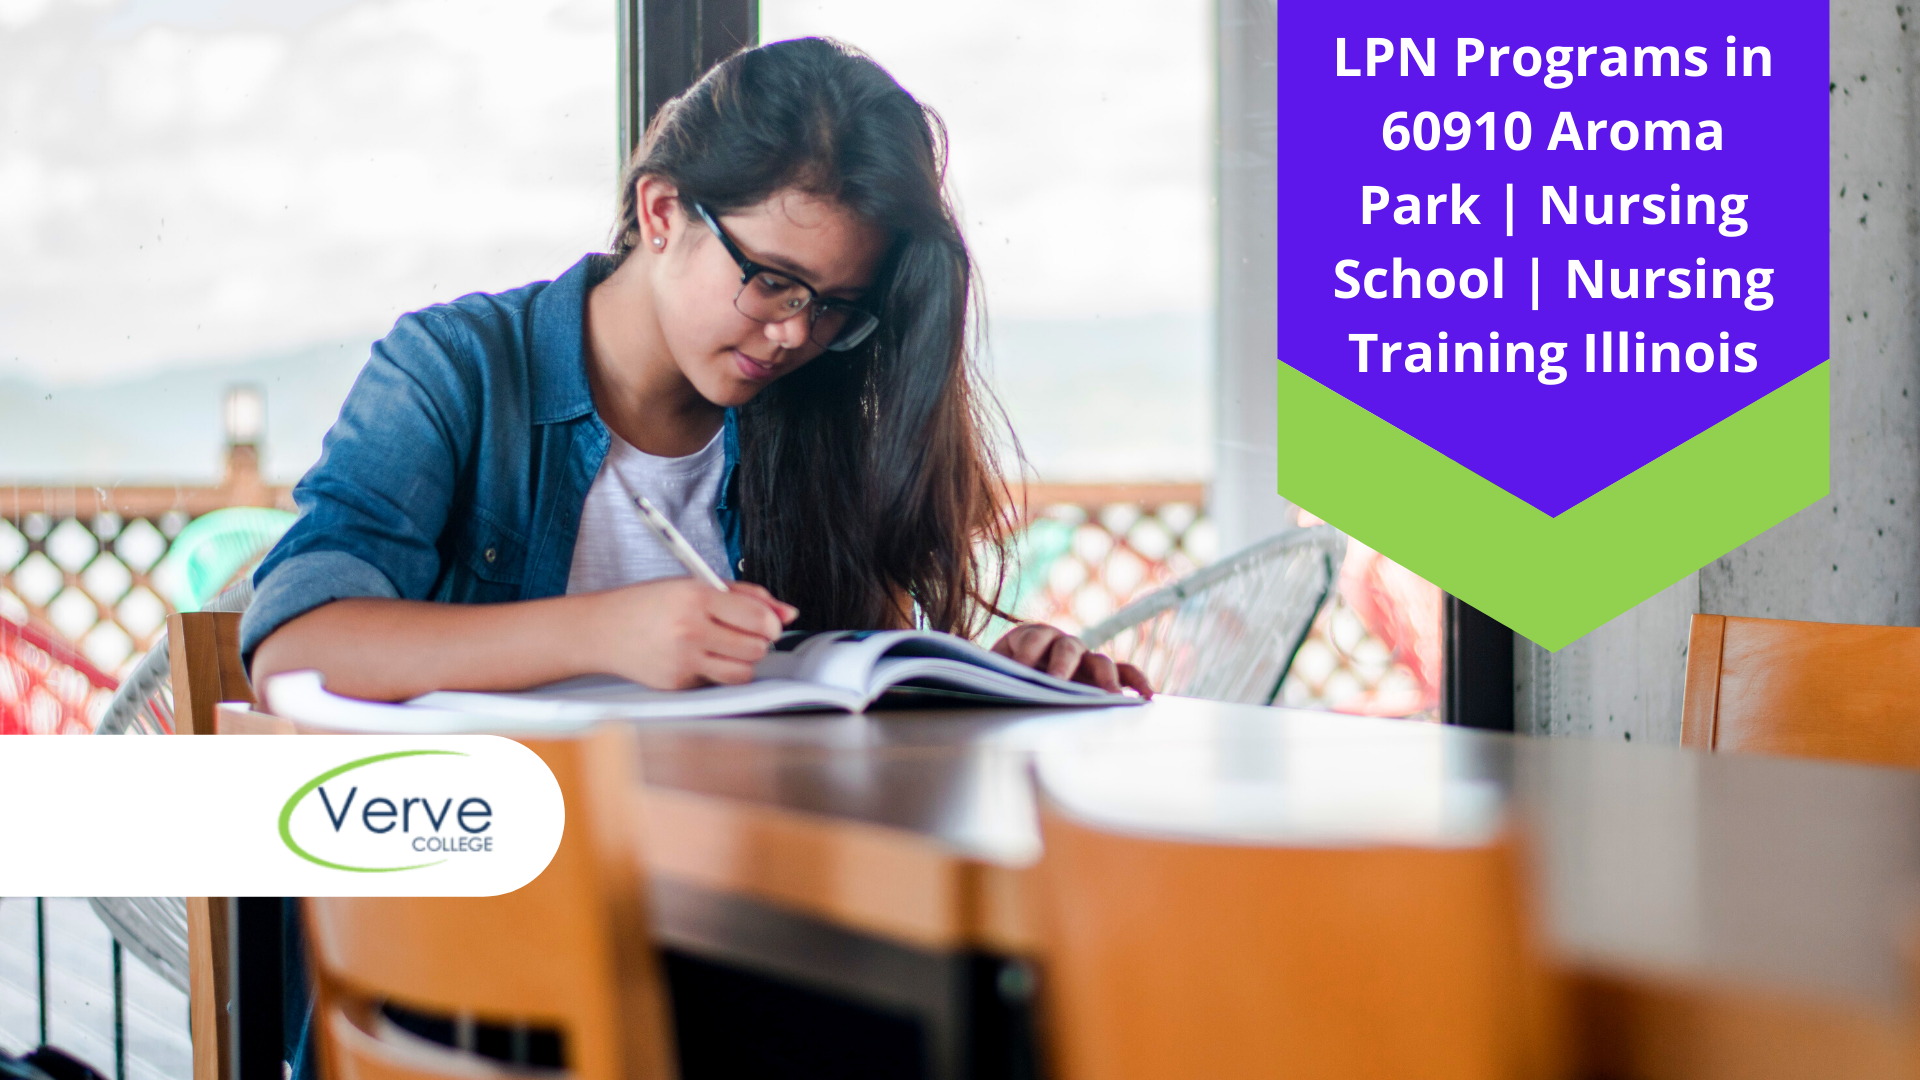 LPN Programs in 60910 Aroma Park | Nursing School | Nursing Training Illinois